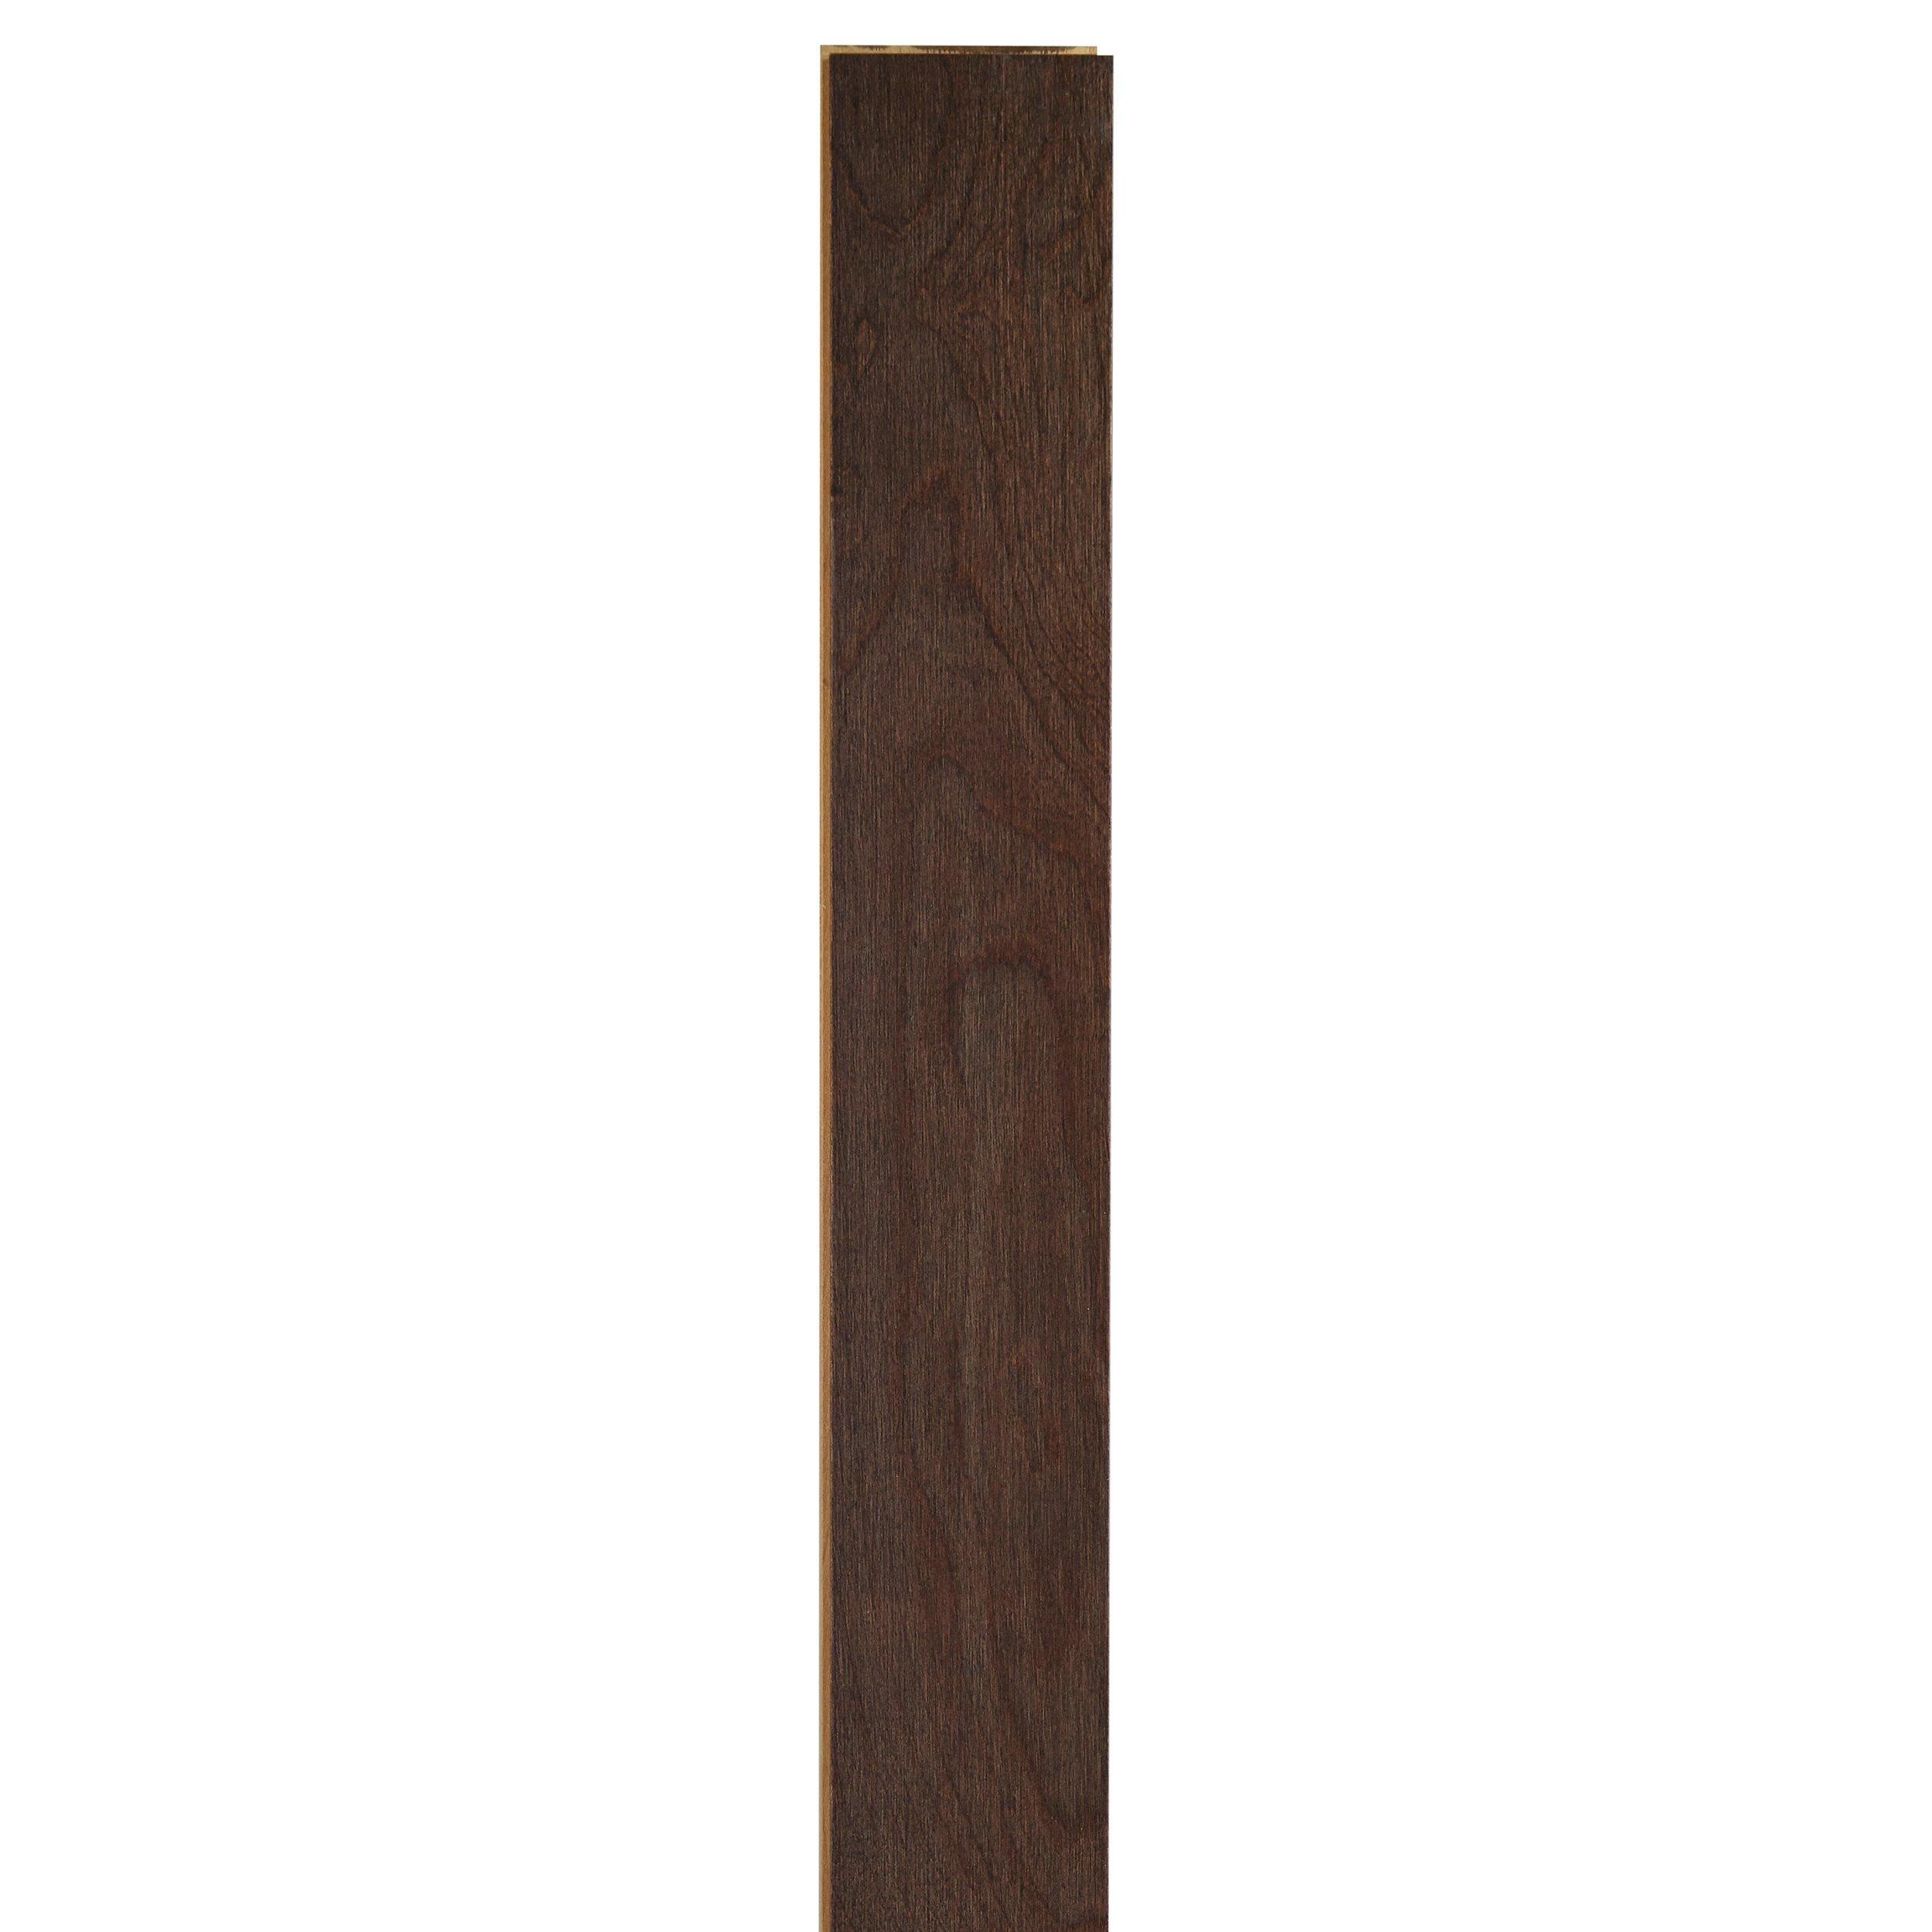 Bari Birch Smooth Engineered Hardwood